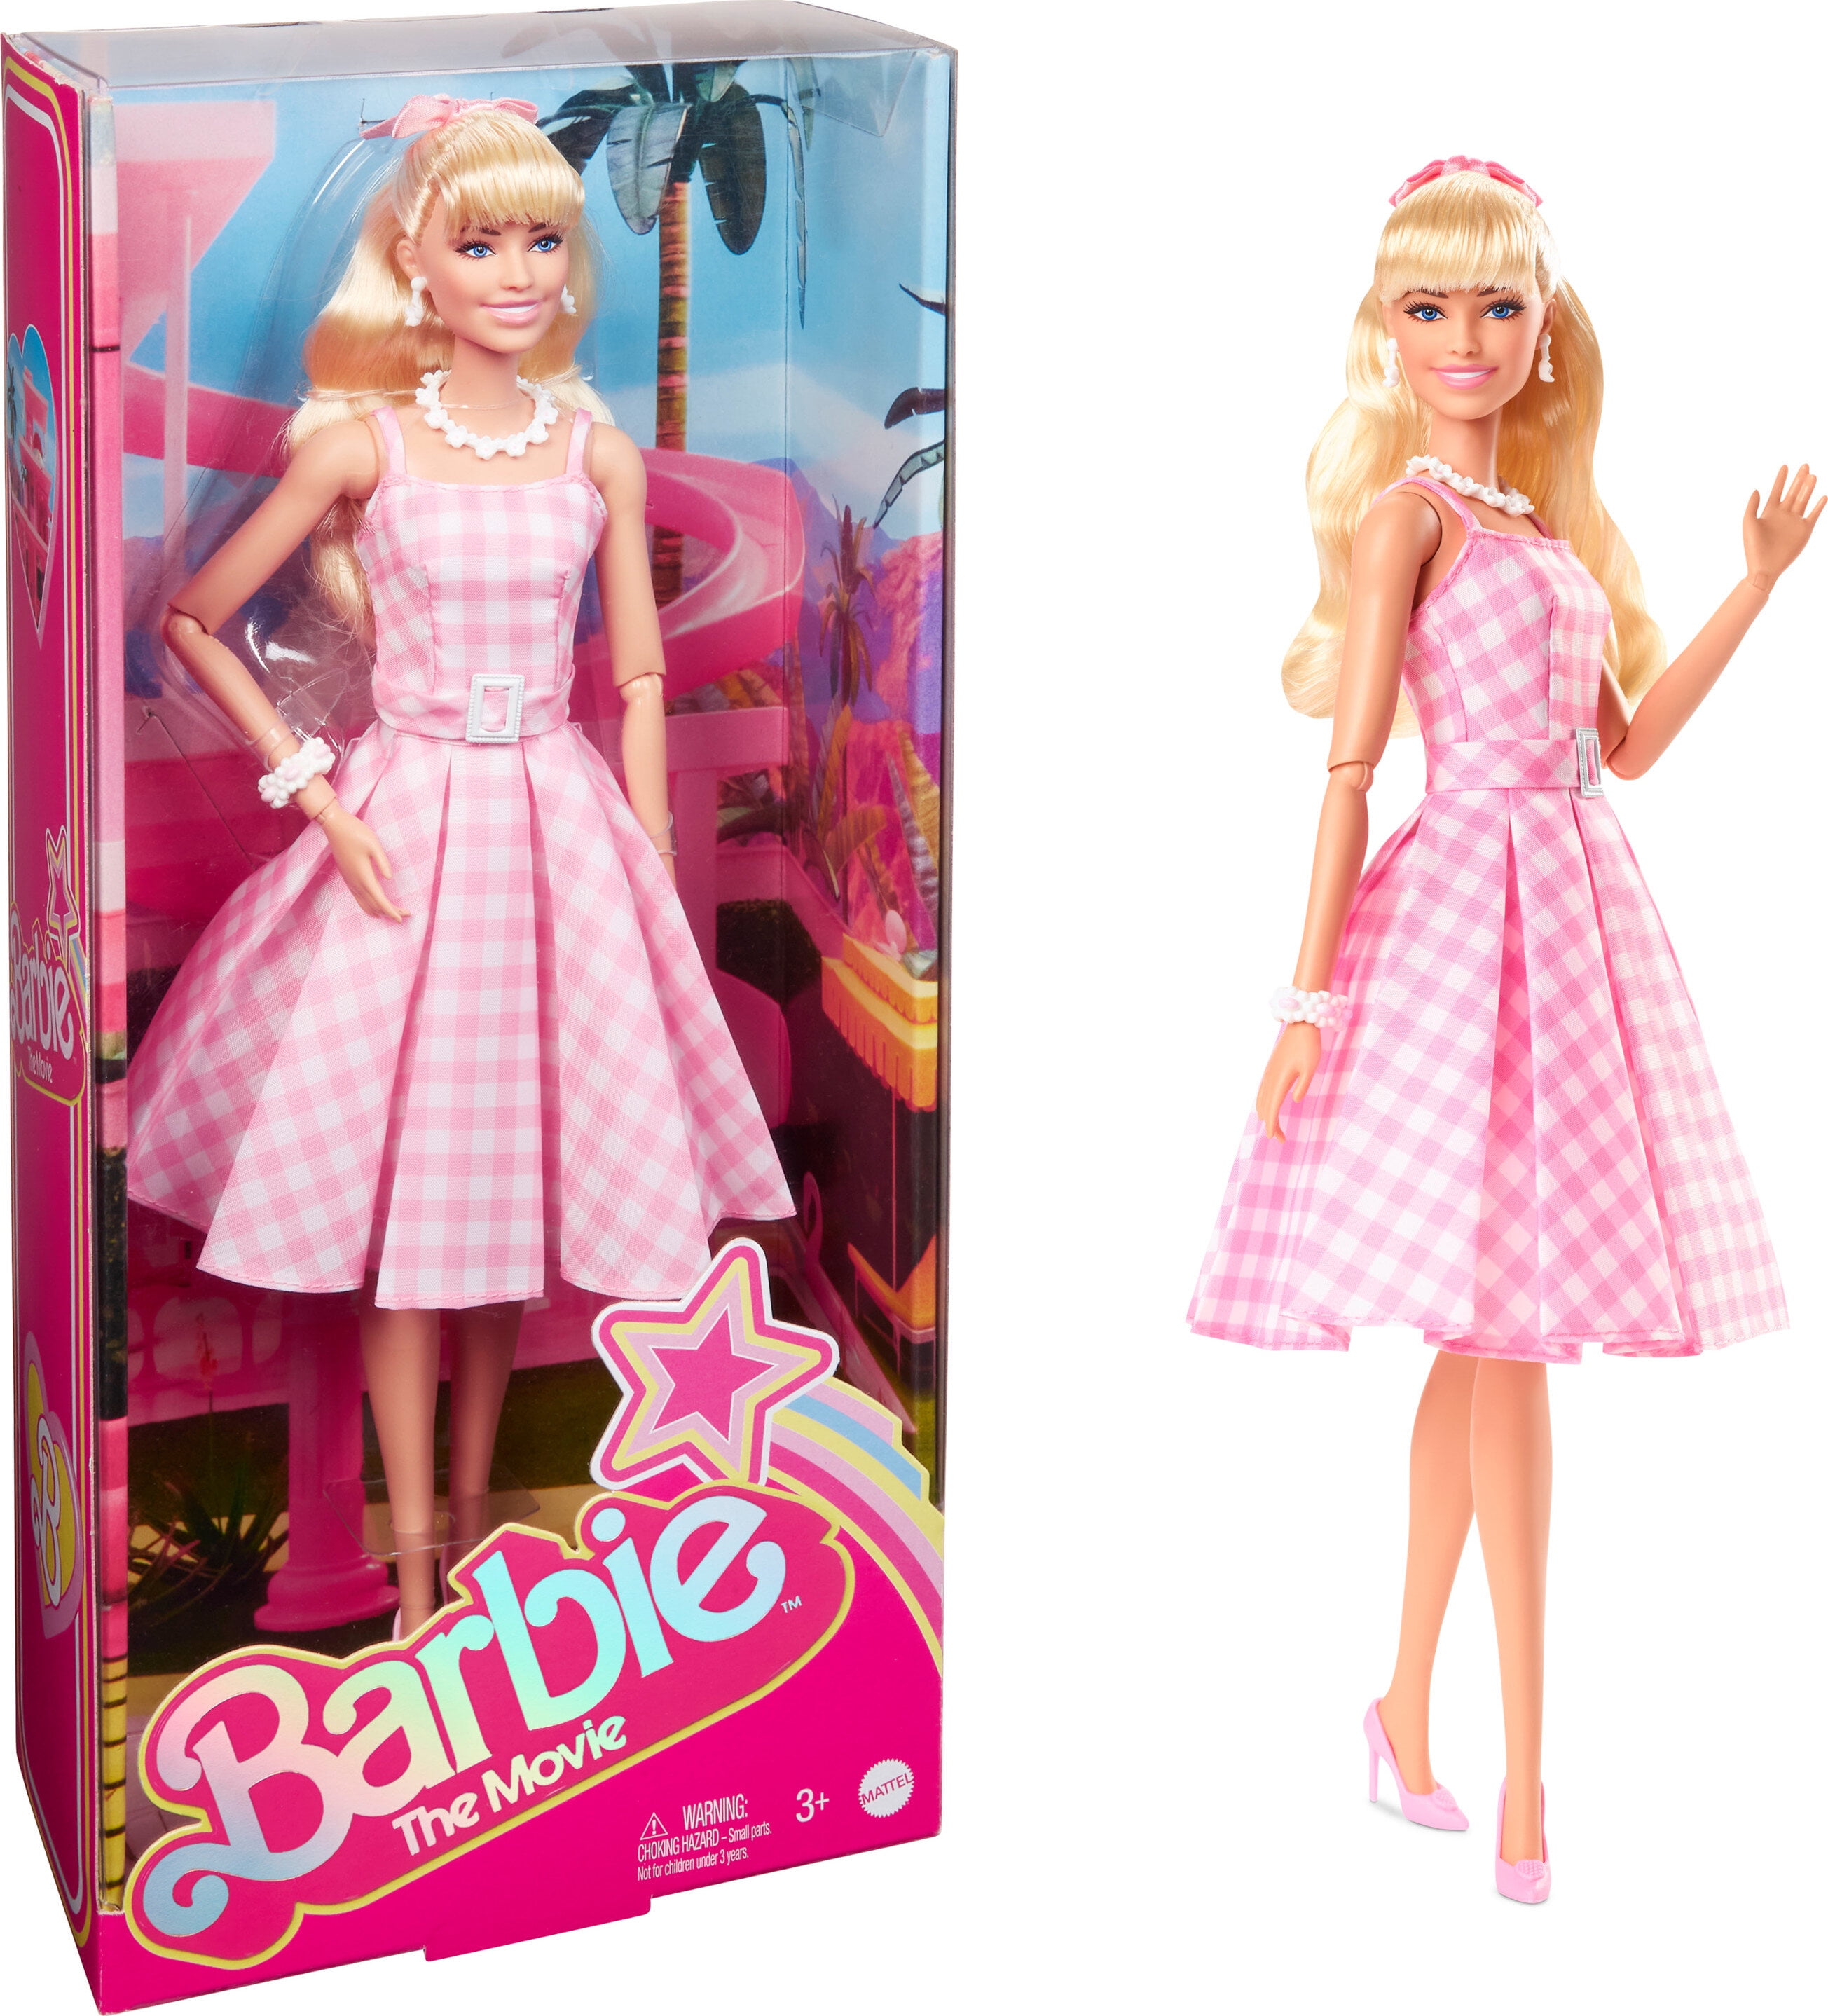 Printed T-shirt for Barbie Doll Barbie Dolls Fashion Brand 